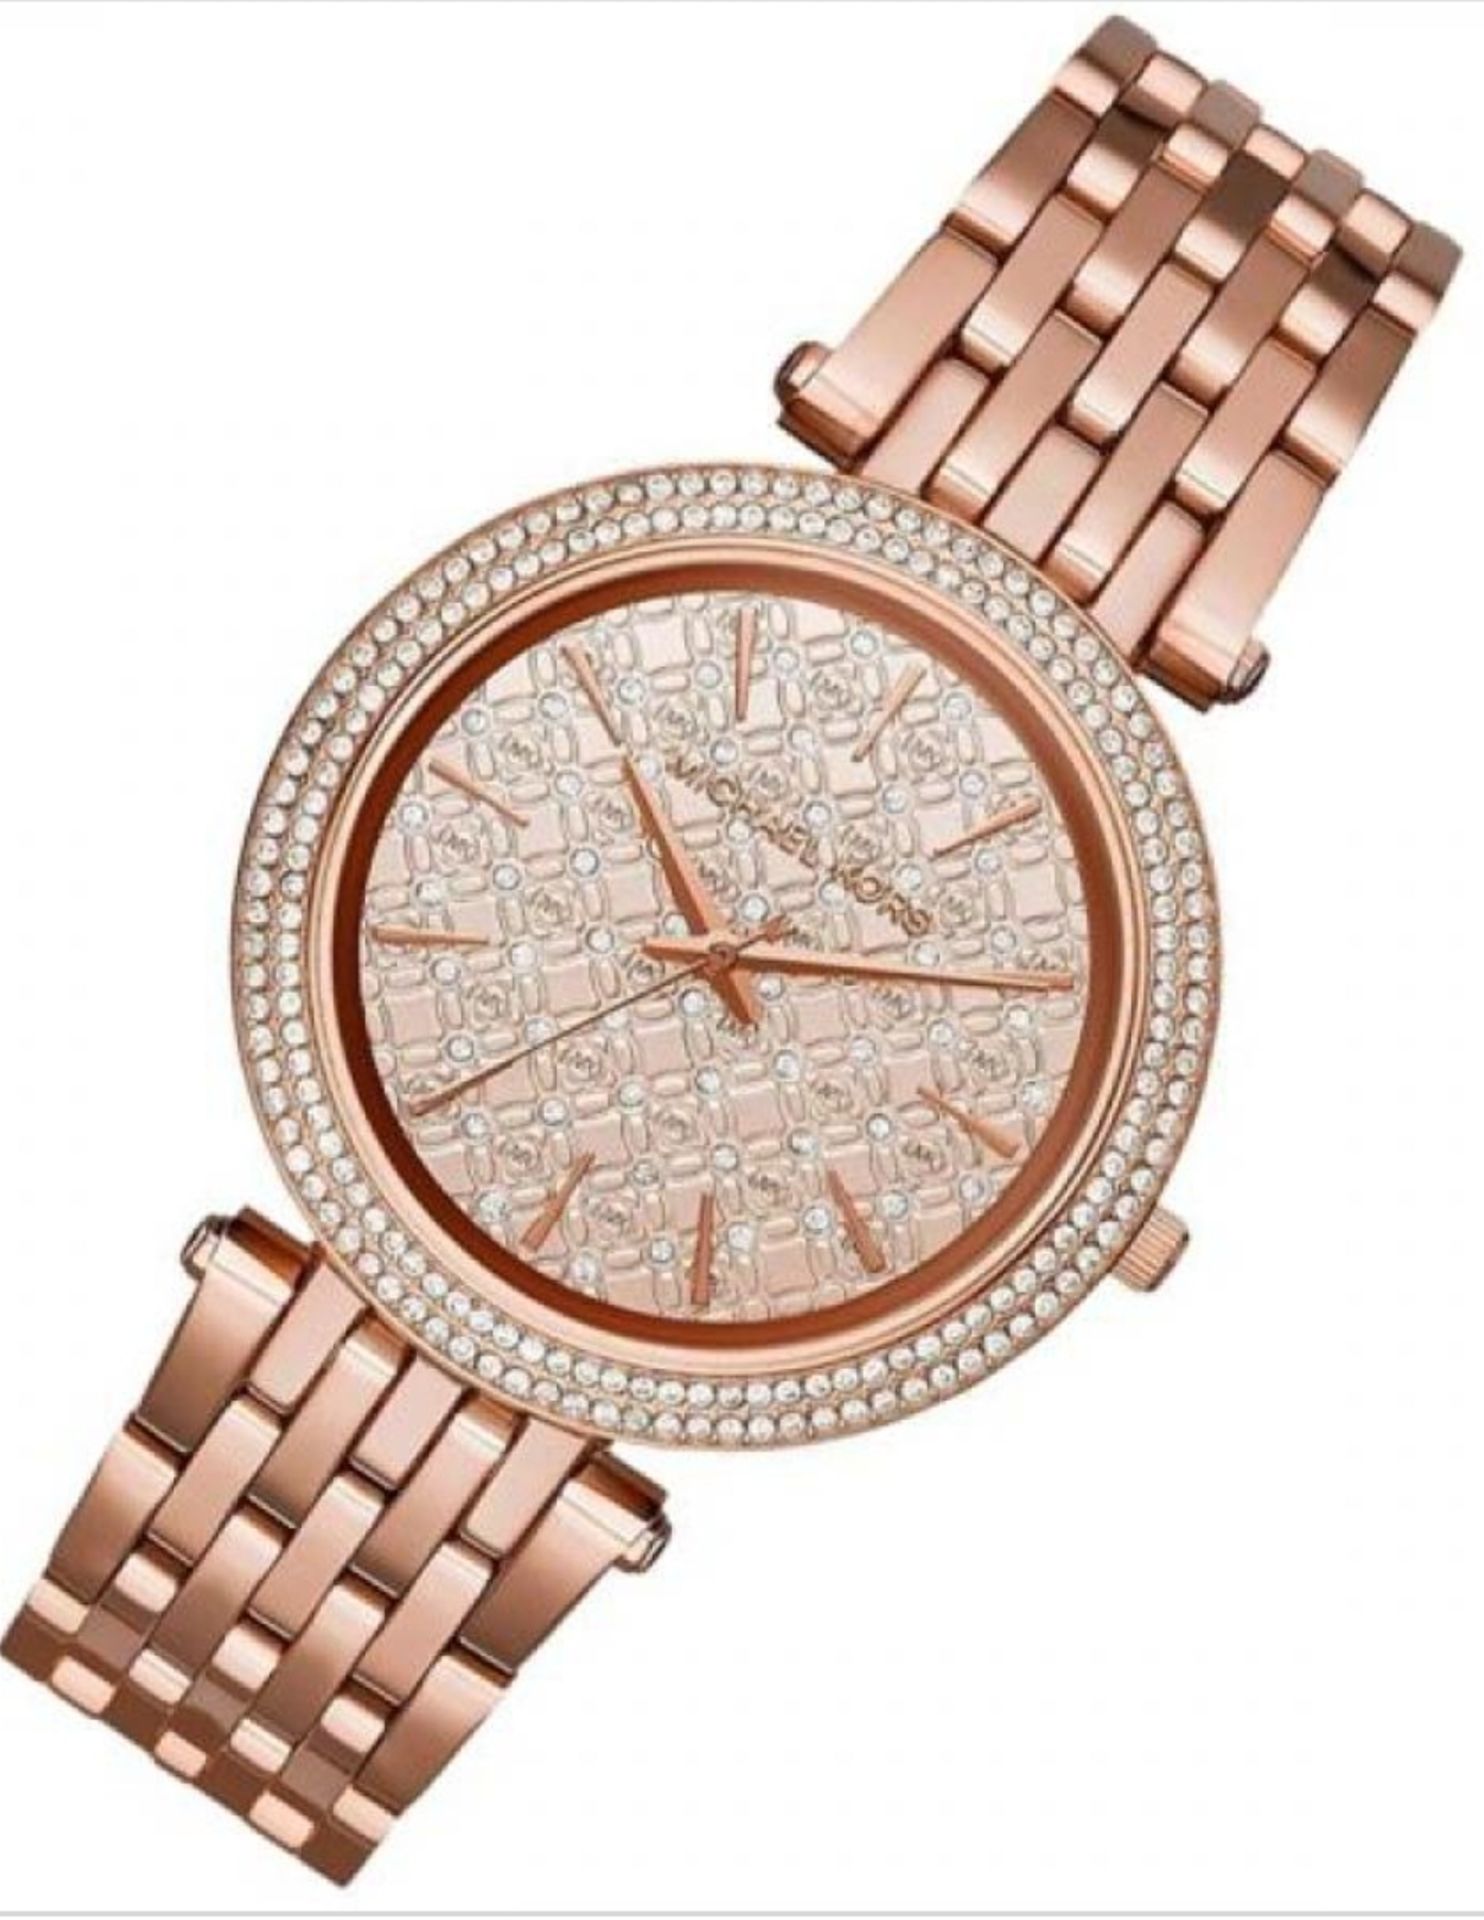 Michael Kors MK3399 Darci Rose Gold Crystal Bezel Ladies Watch - Image 3 of 7